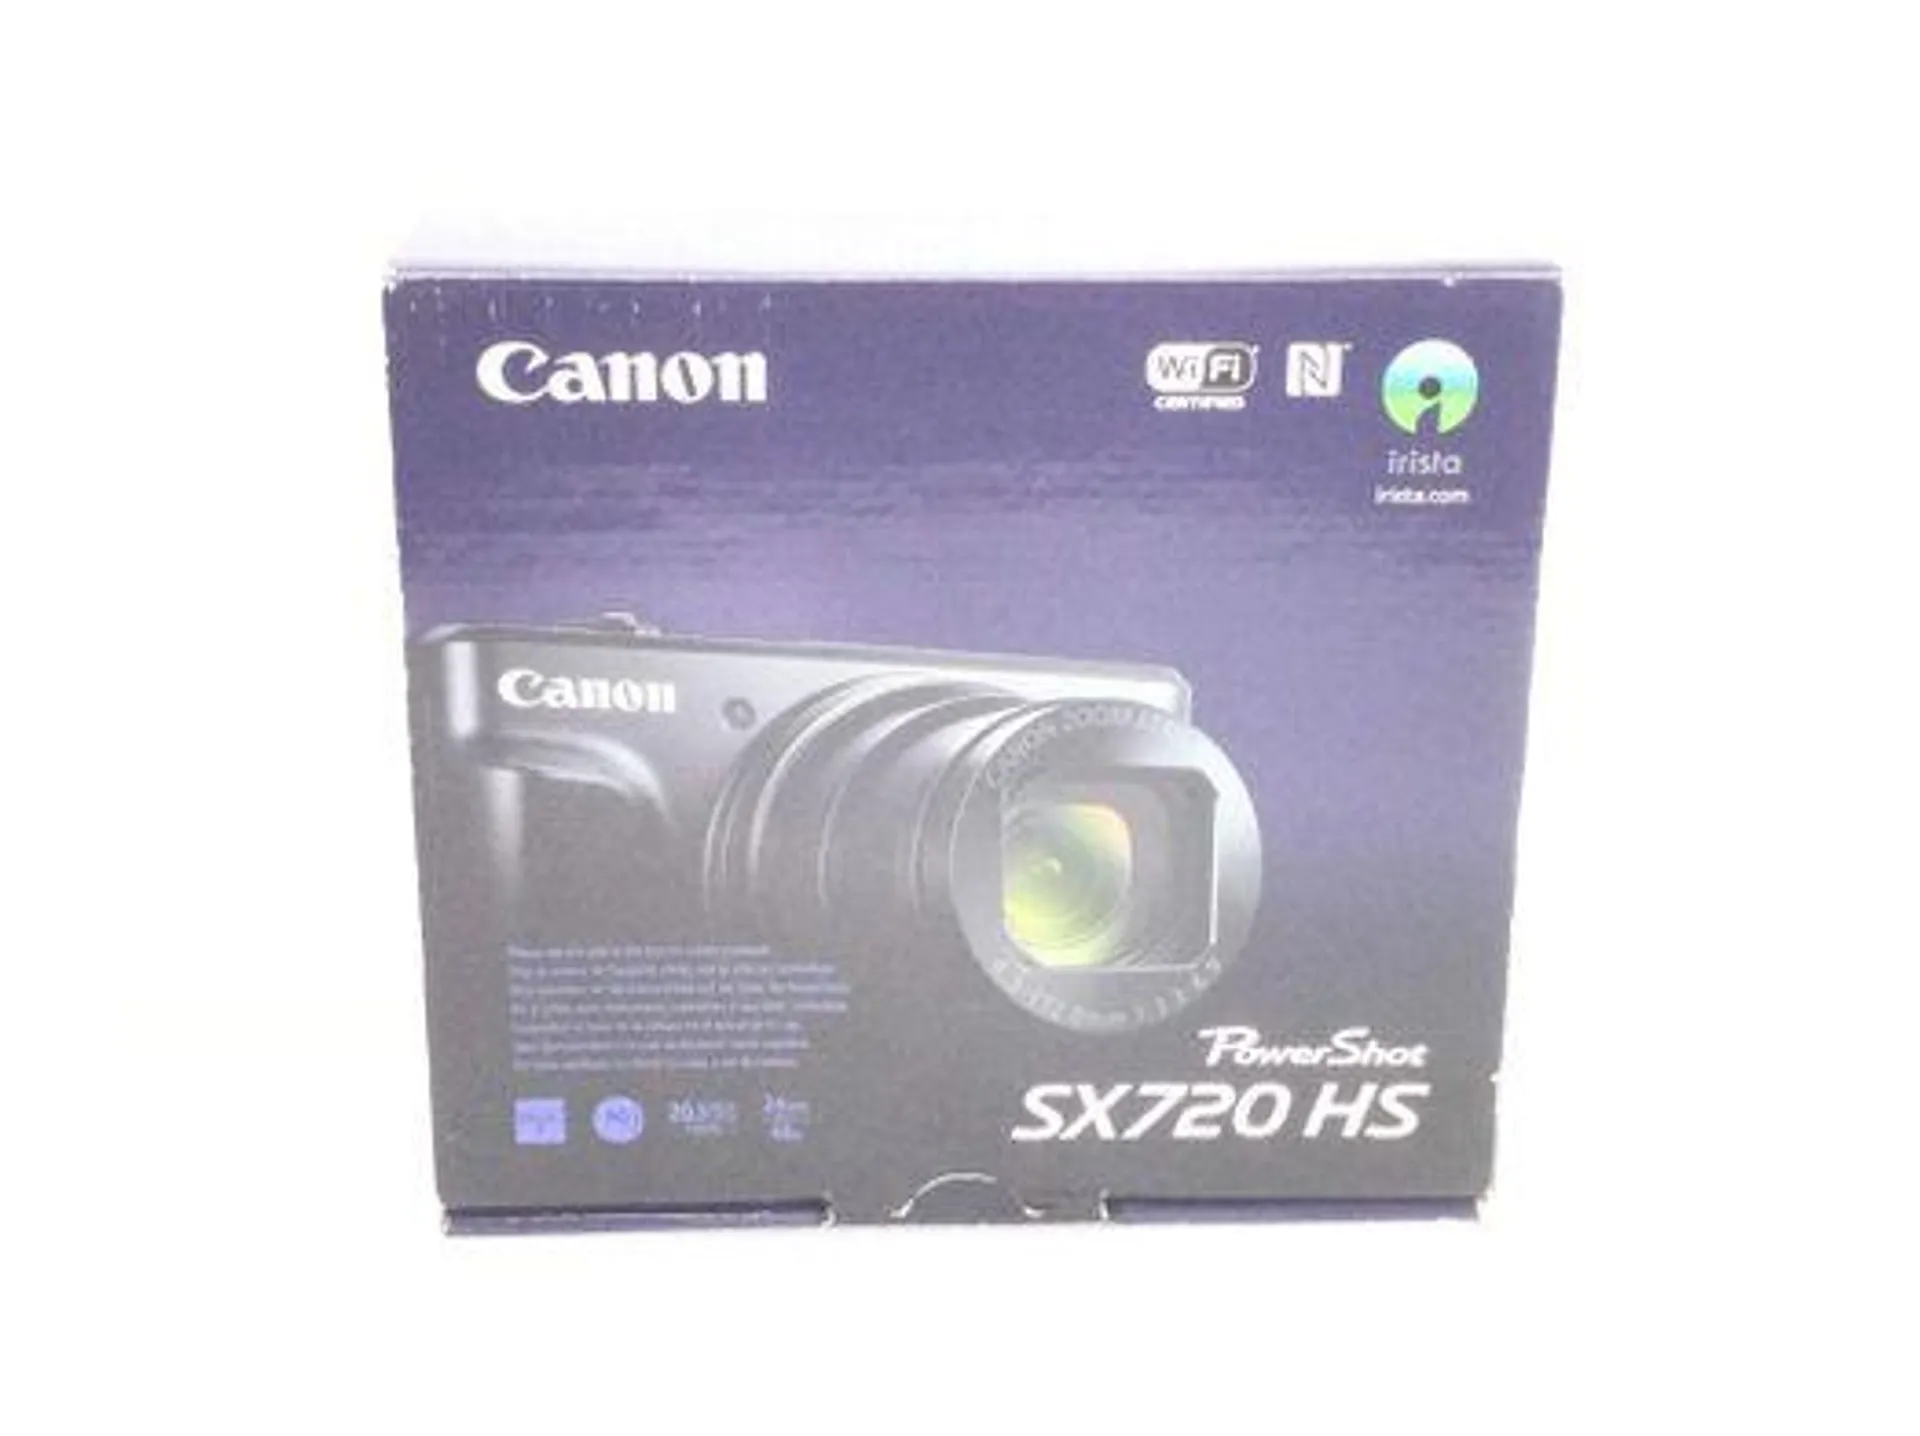 camara digital compacta canon sx720 hs